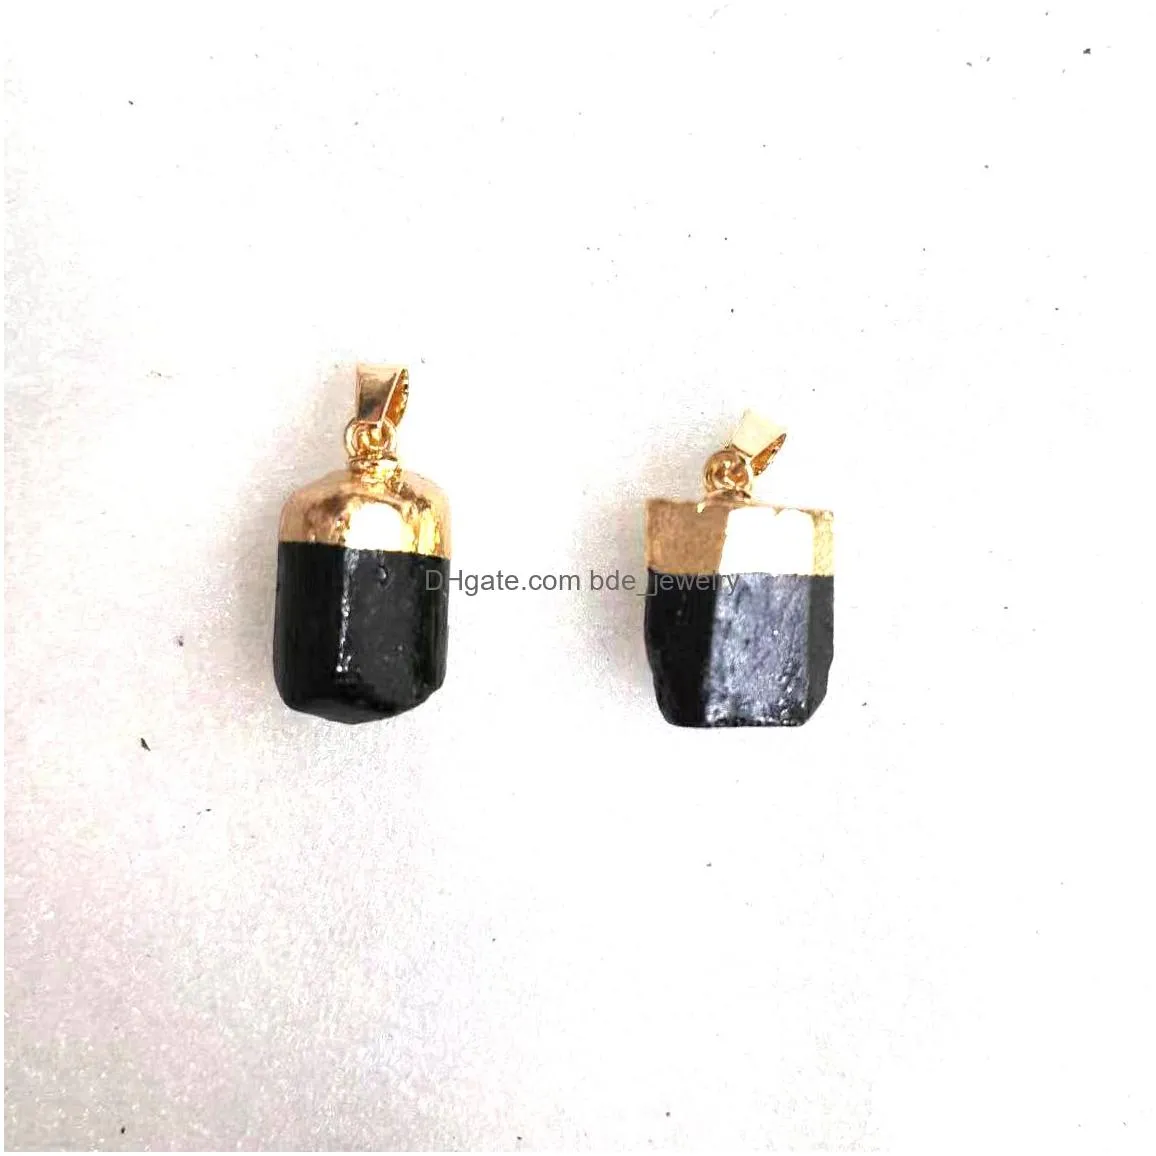 natural irregular tourmaline pendant black quartz gold edged charms energy stone healing meditation yoga gift